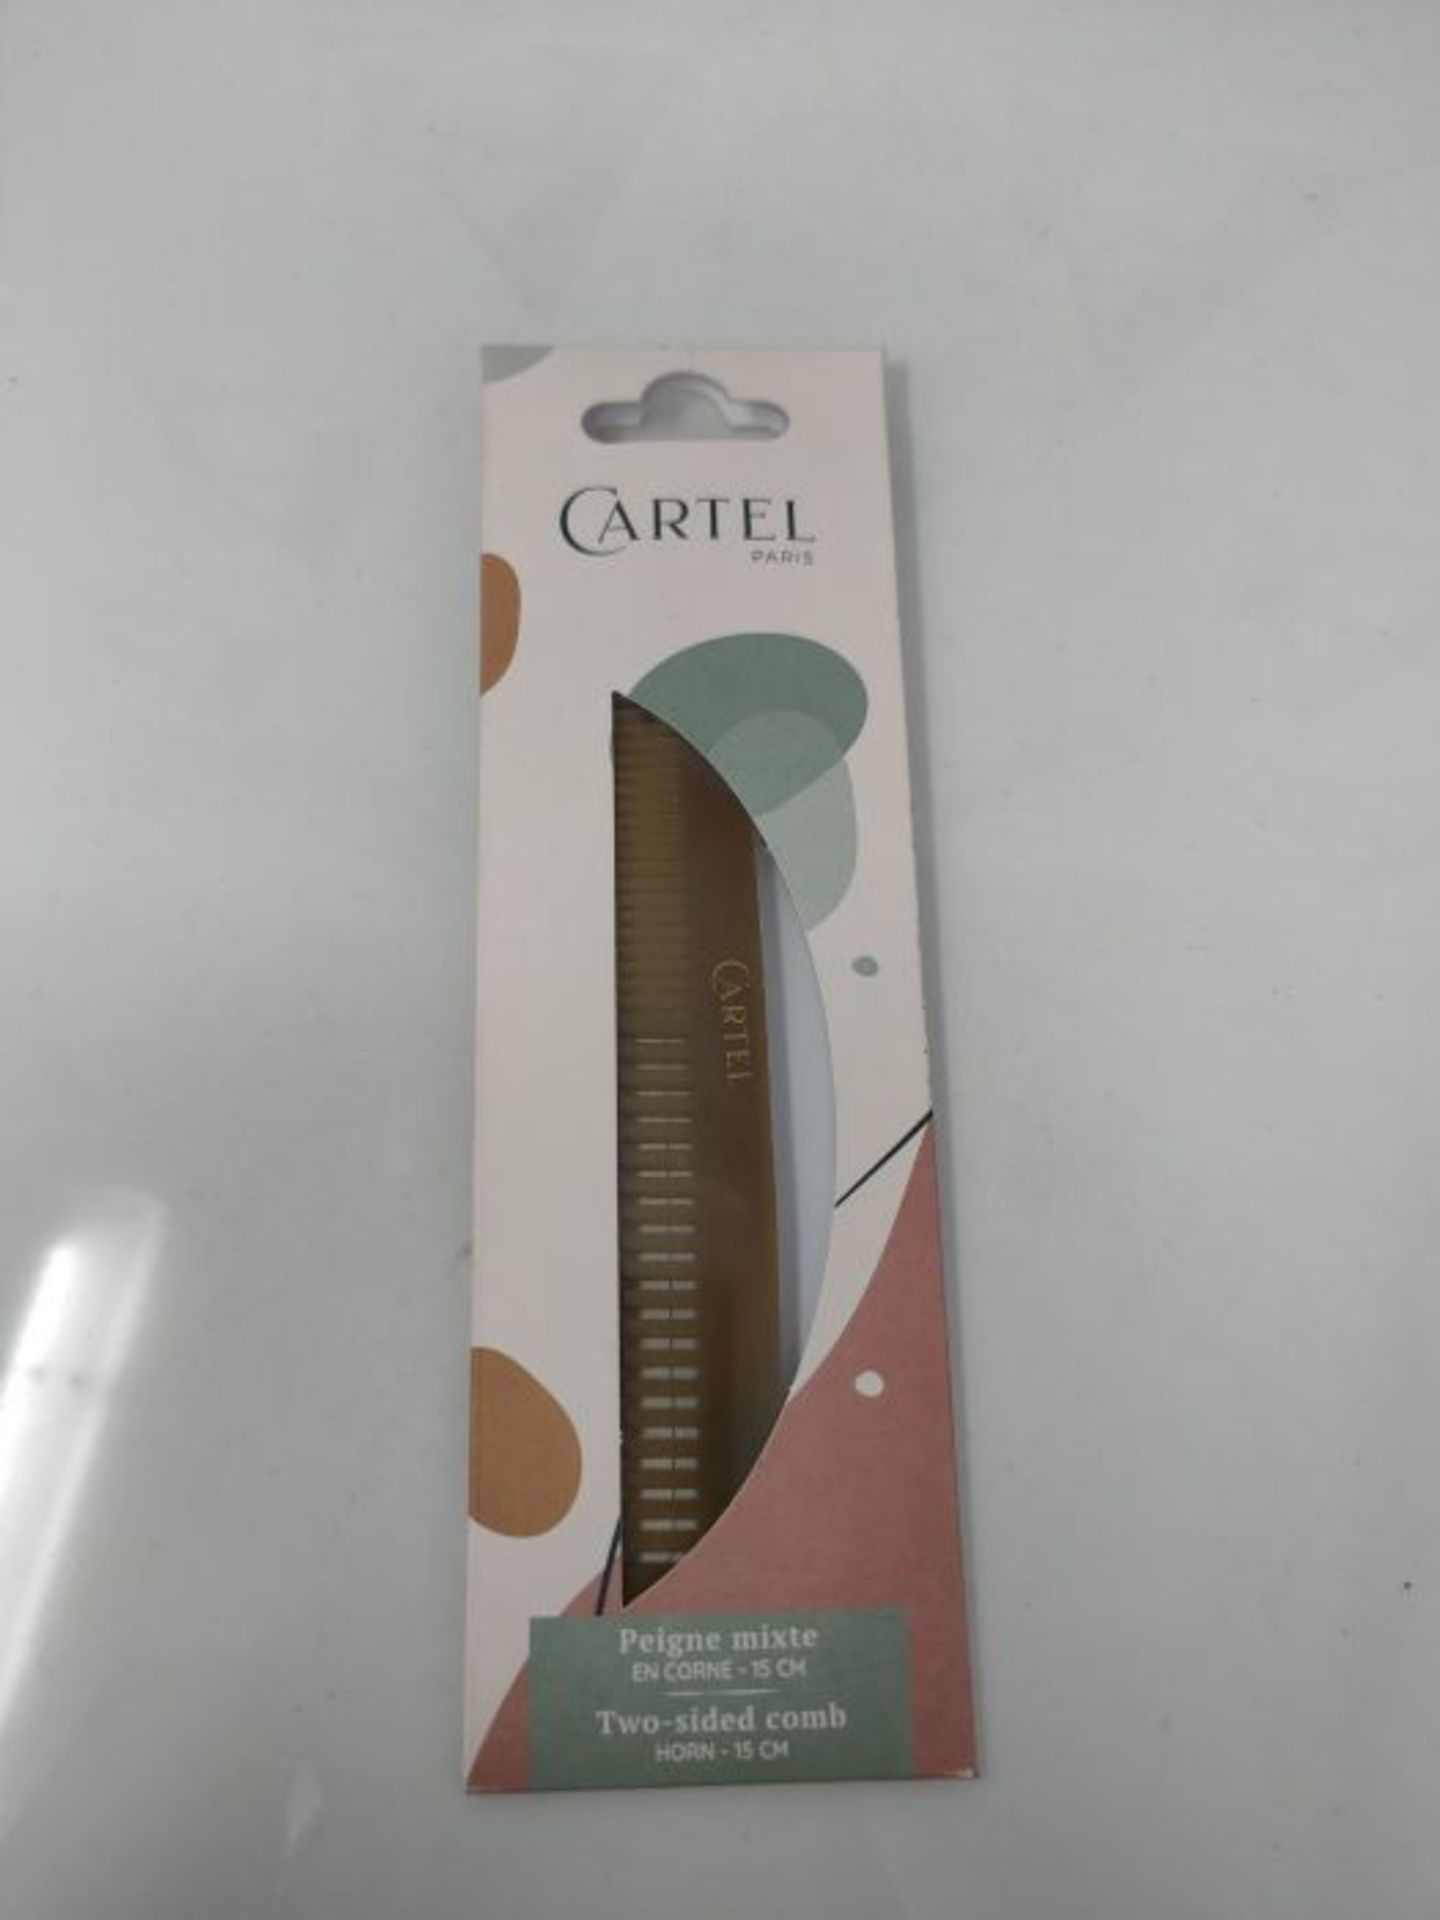 Cartel Professional Mixed Horn Comb - Image 2 of 3